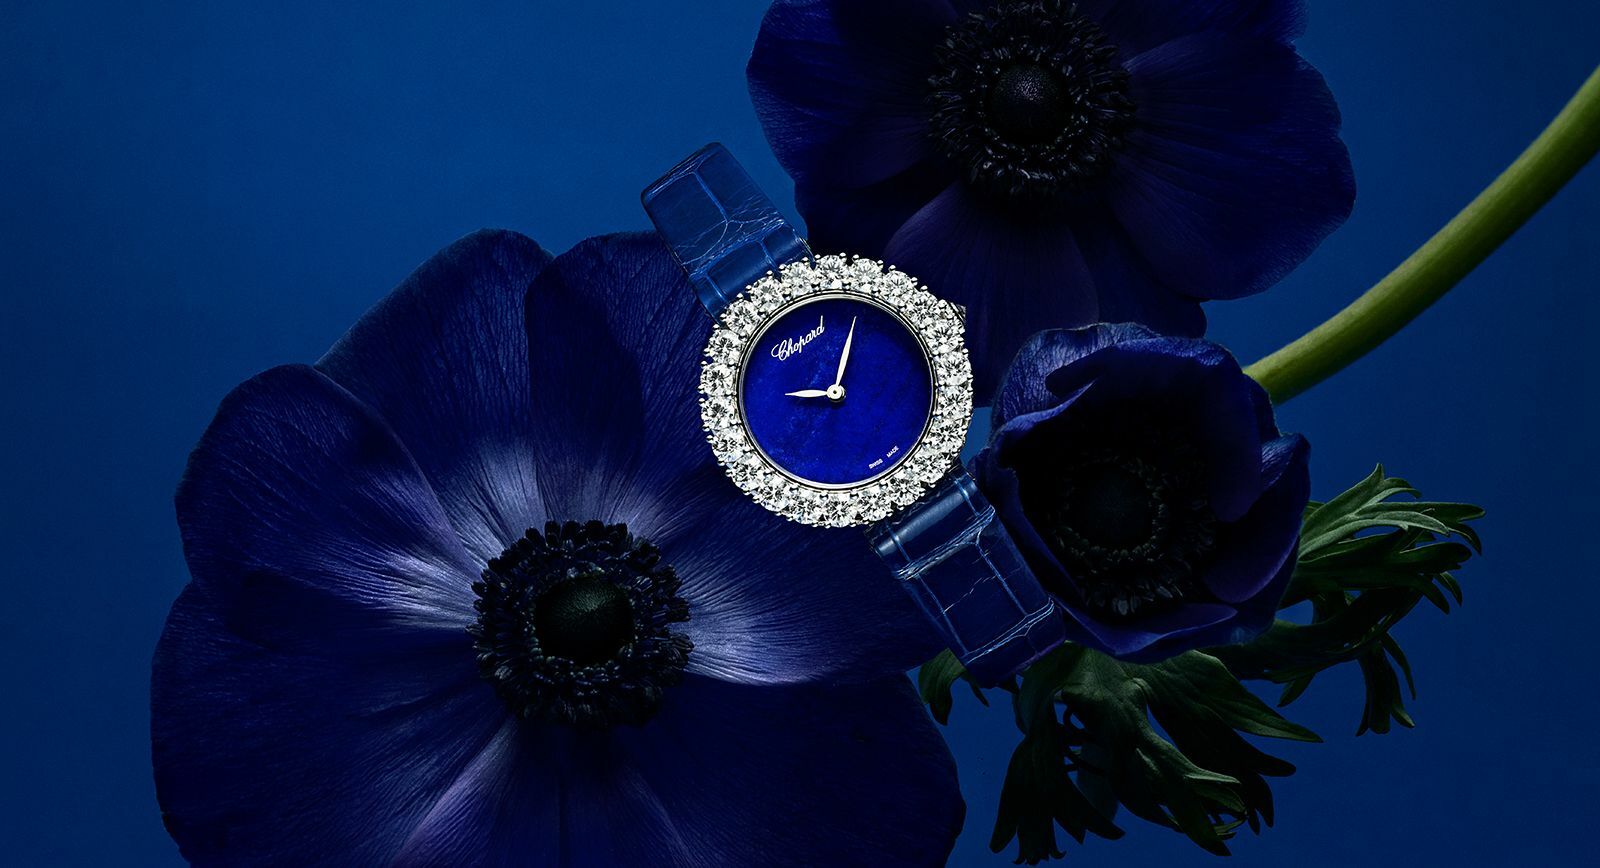 Часы Chopard L’Heure du Diamant